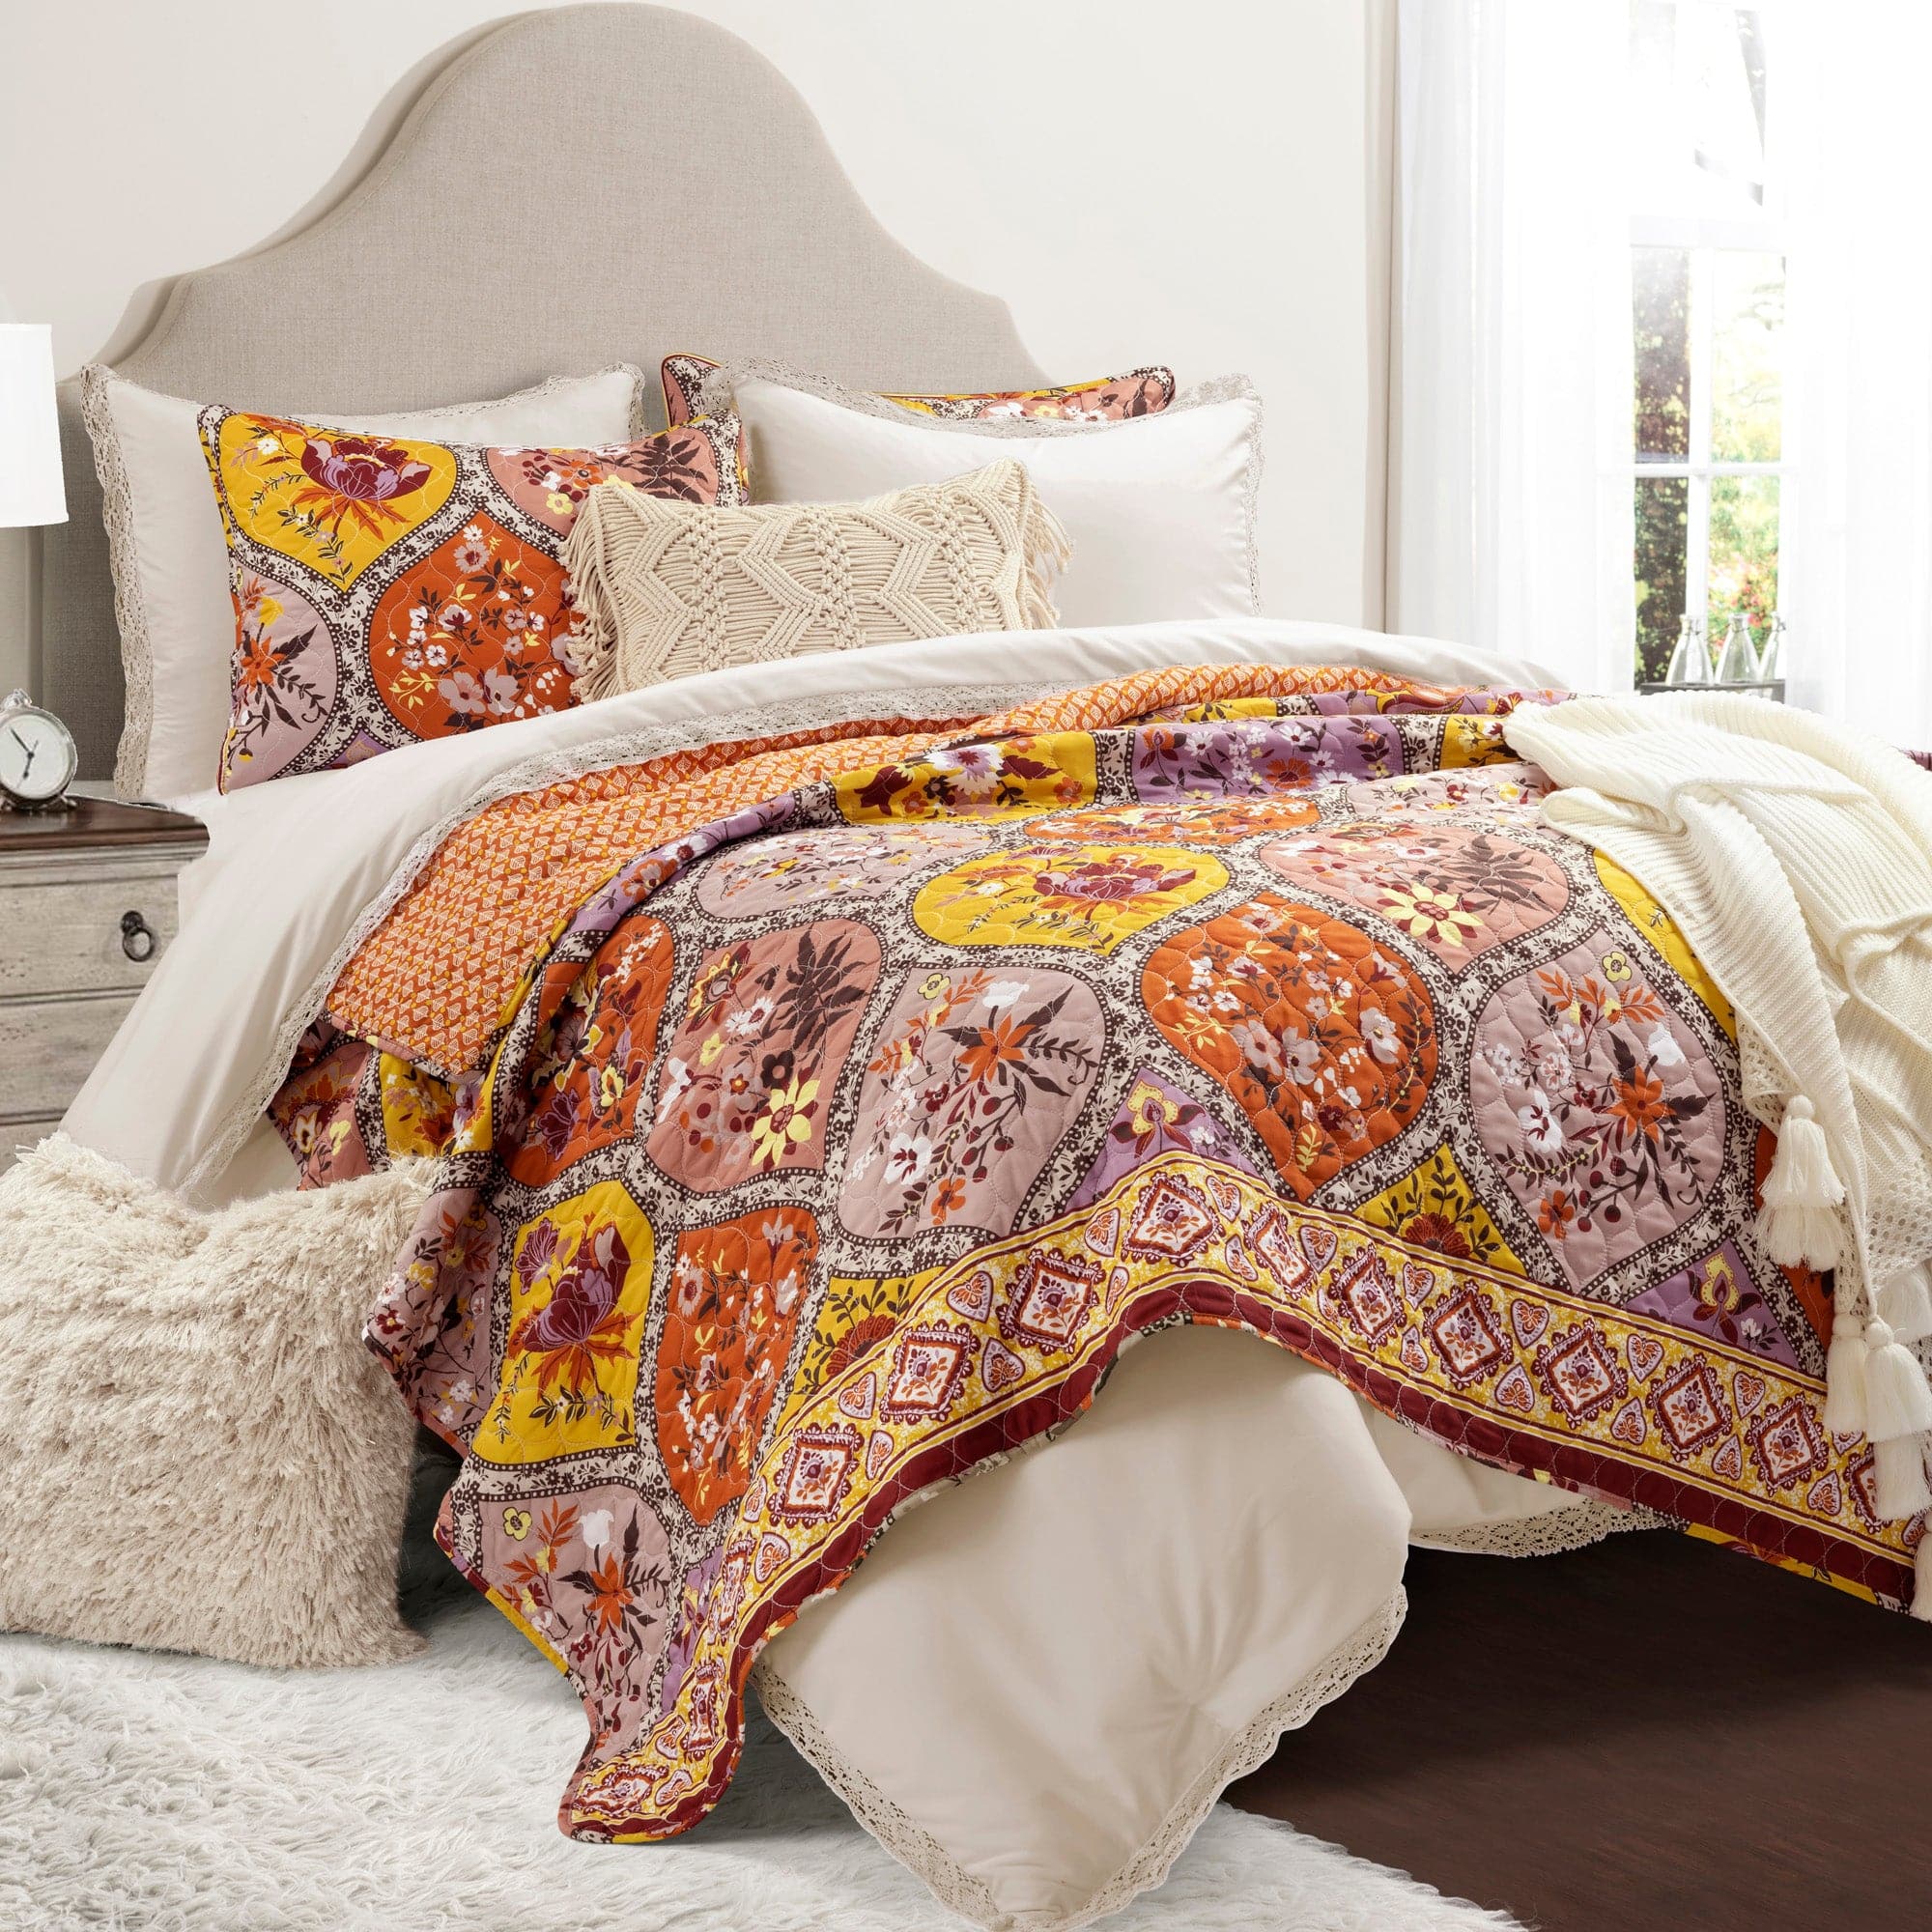 Decorative Cotton Large Couch Pillows Orange Patchwork Floral Cushion Cover